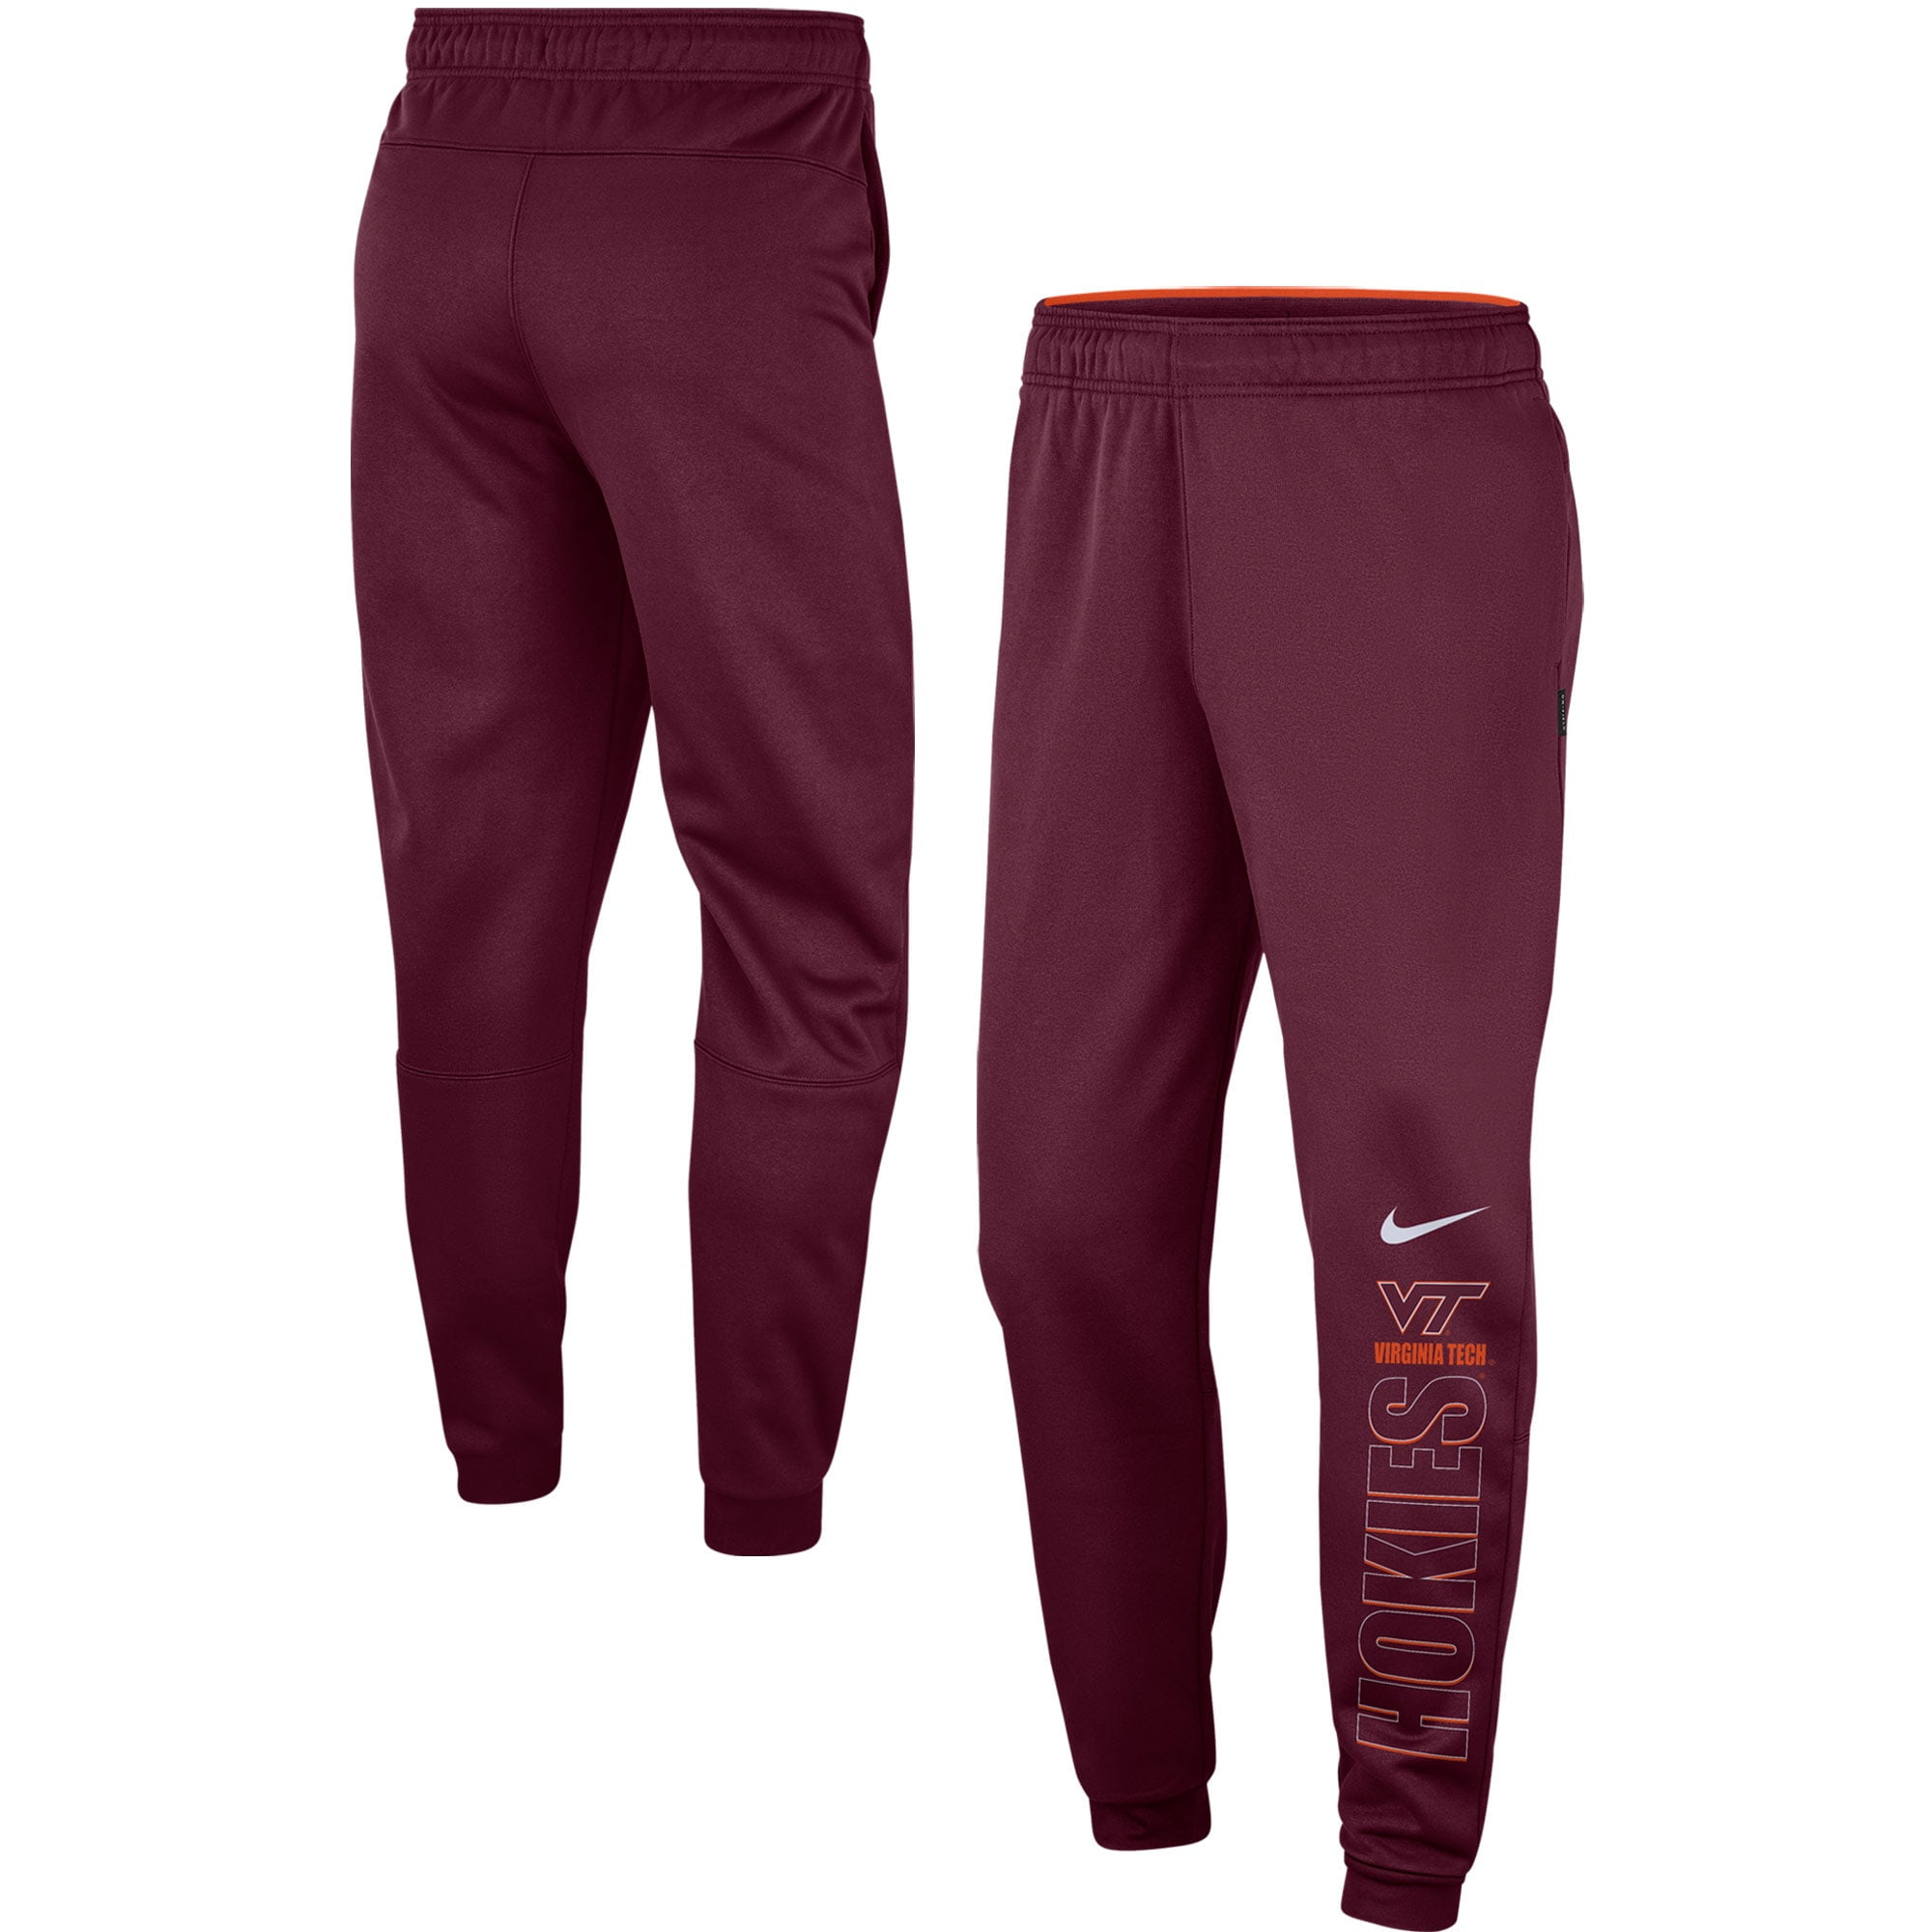 Virginia Tech Hokies Nike Team Performance Pants - Maroon - Walmart.com ...